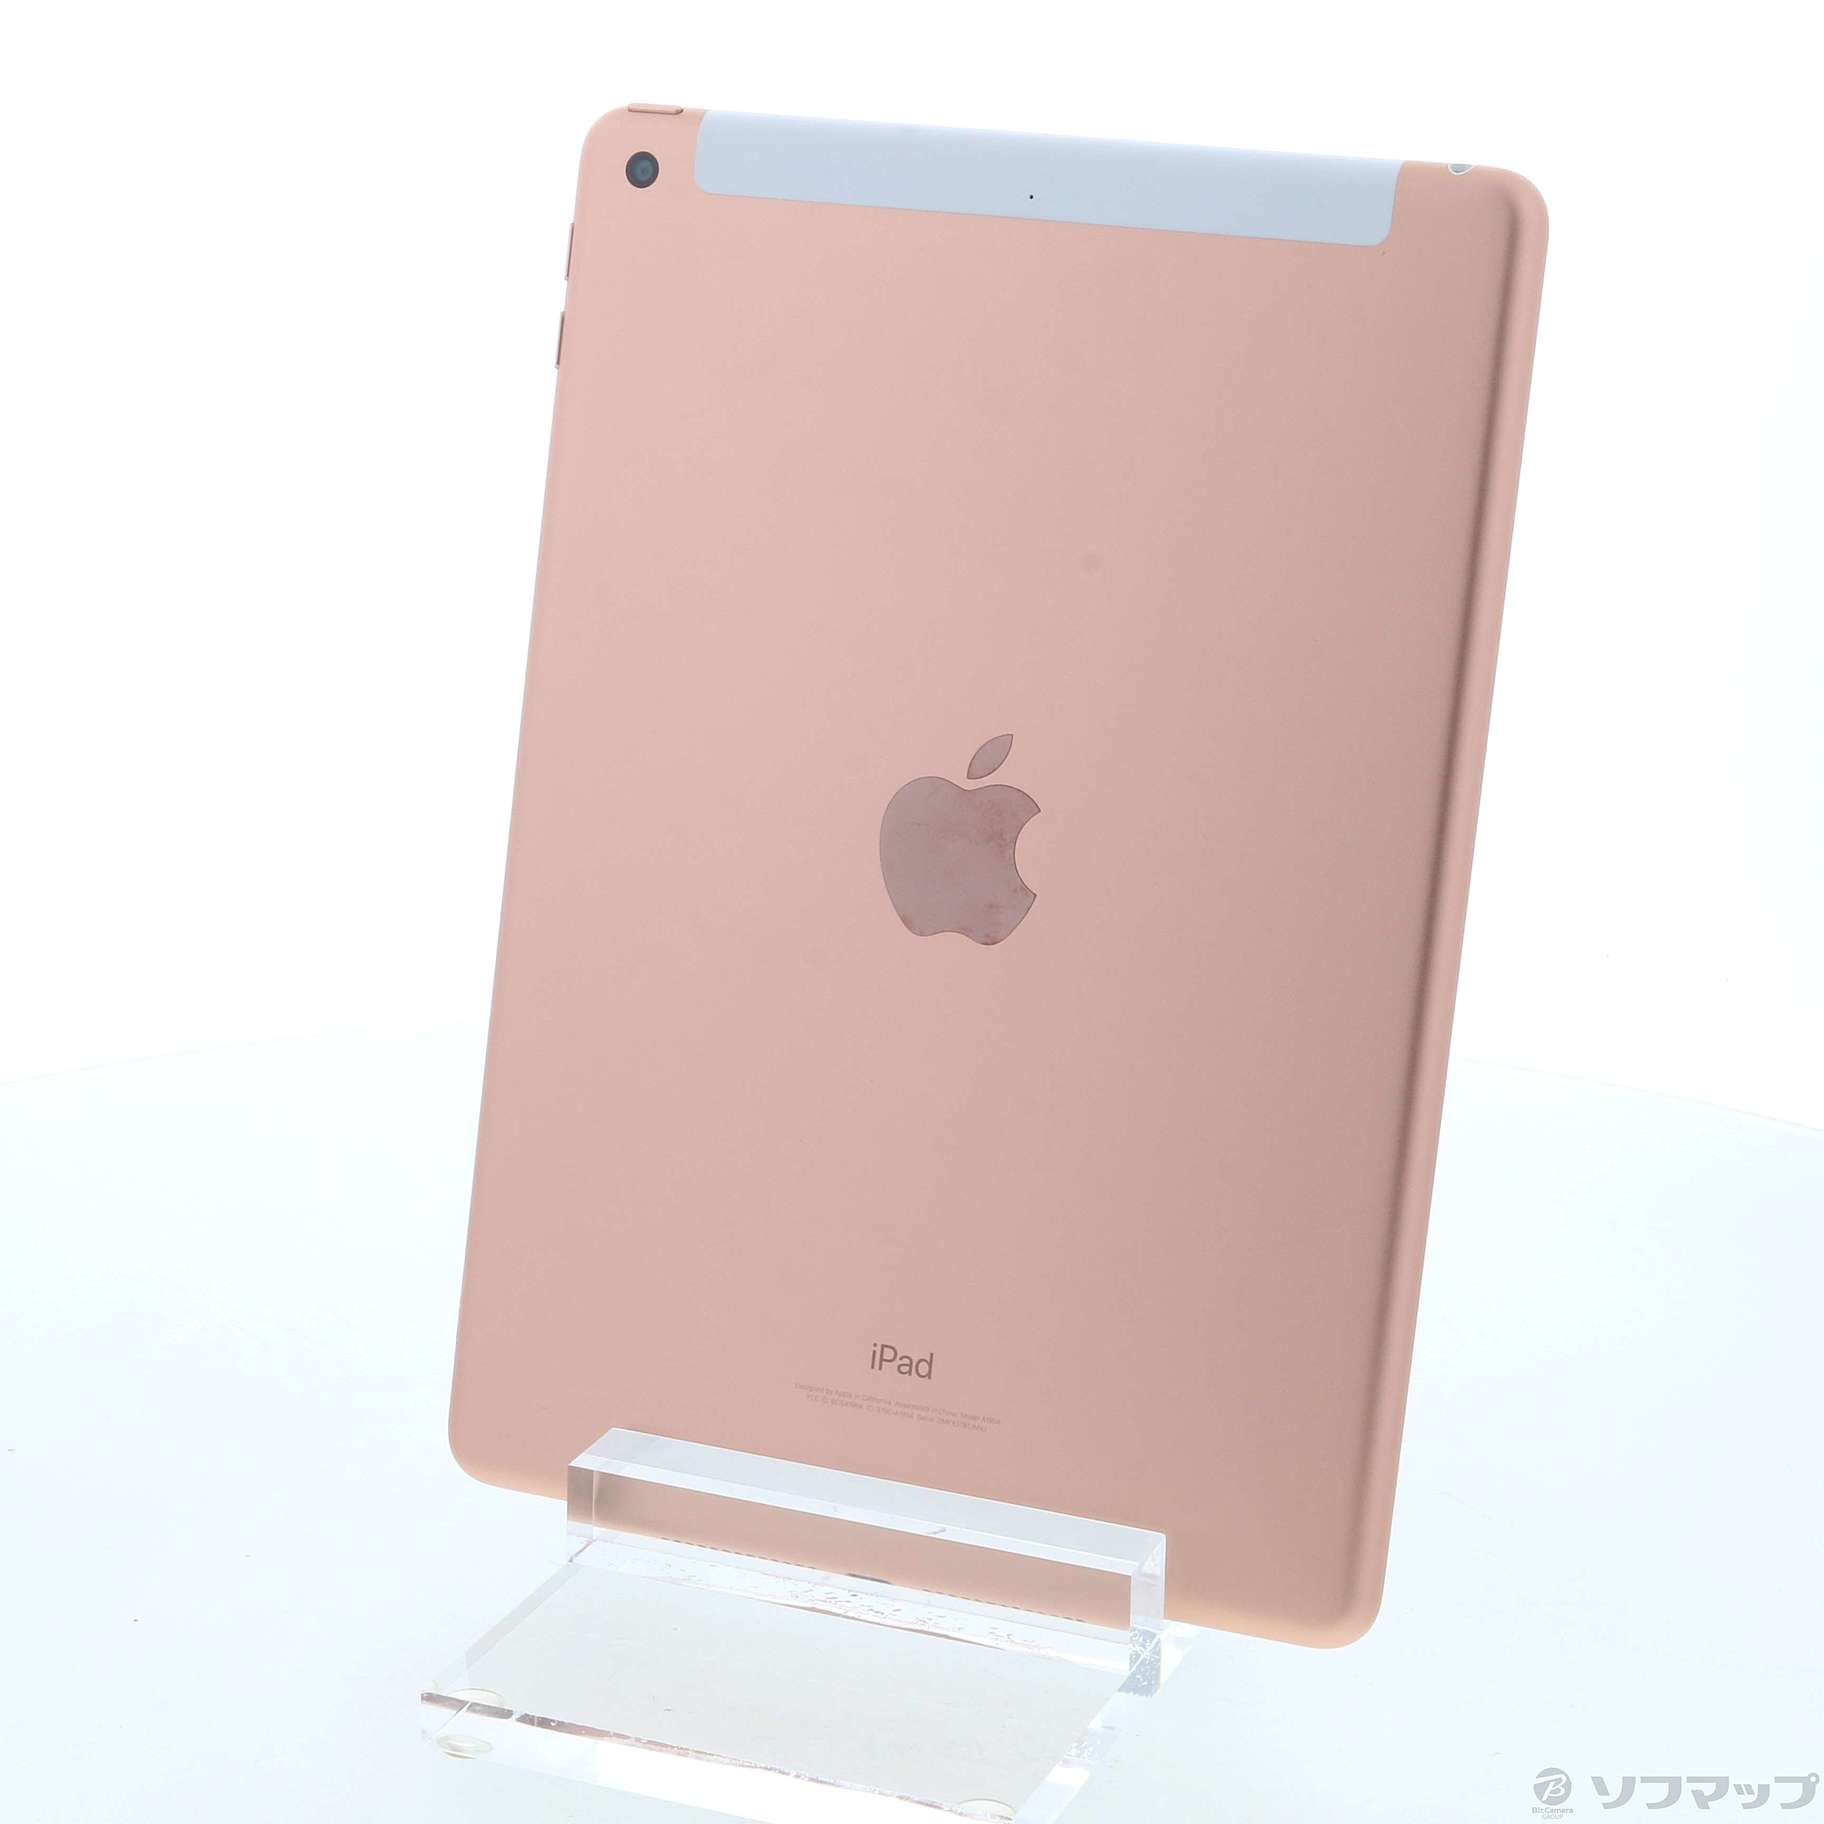 激安格安割引情報満載 iPad 第6世代 中古品 ピンク 32GB